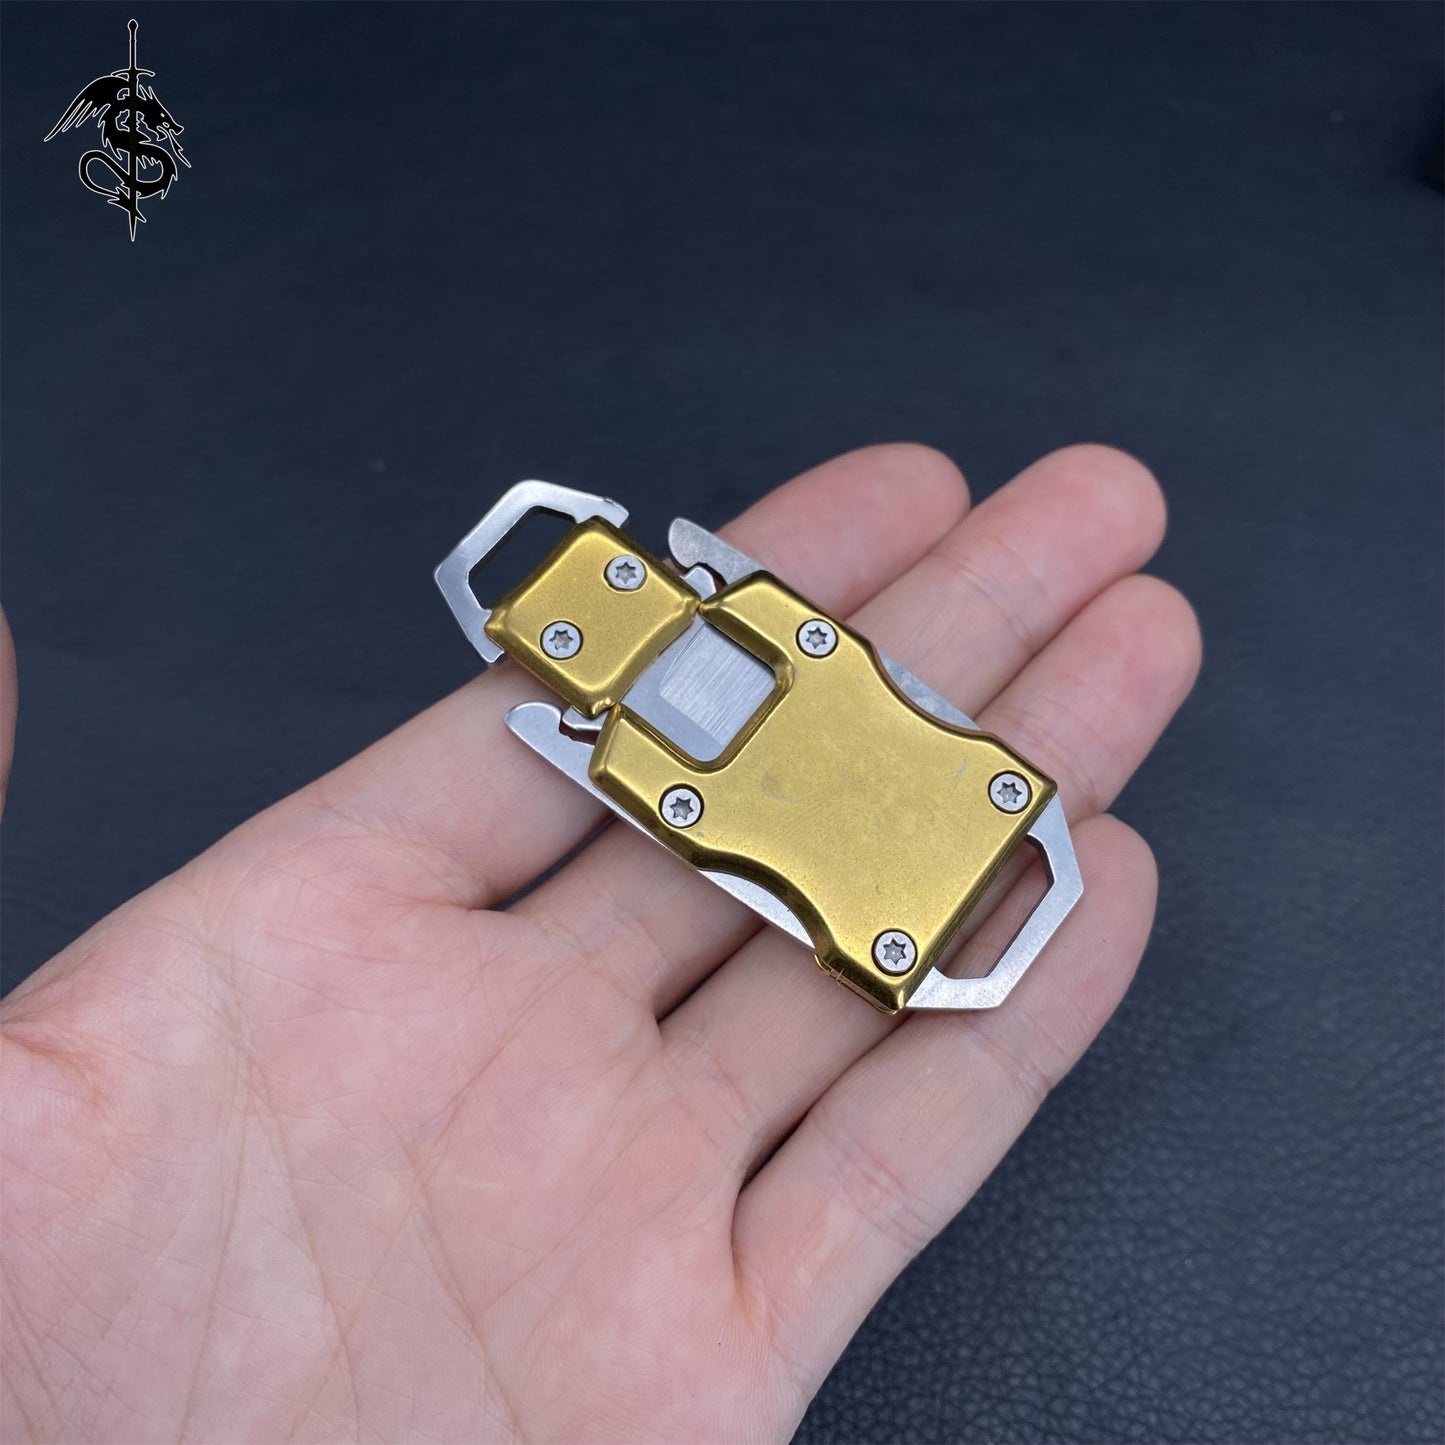 Transformers Keychain Portable Knife EDC Sharp Steel Tool Knife